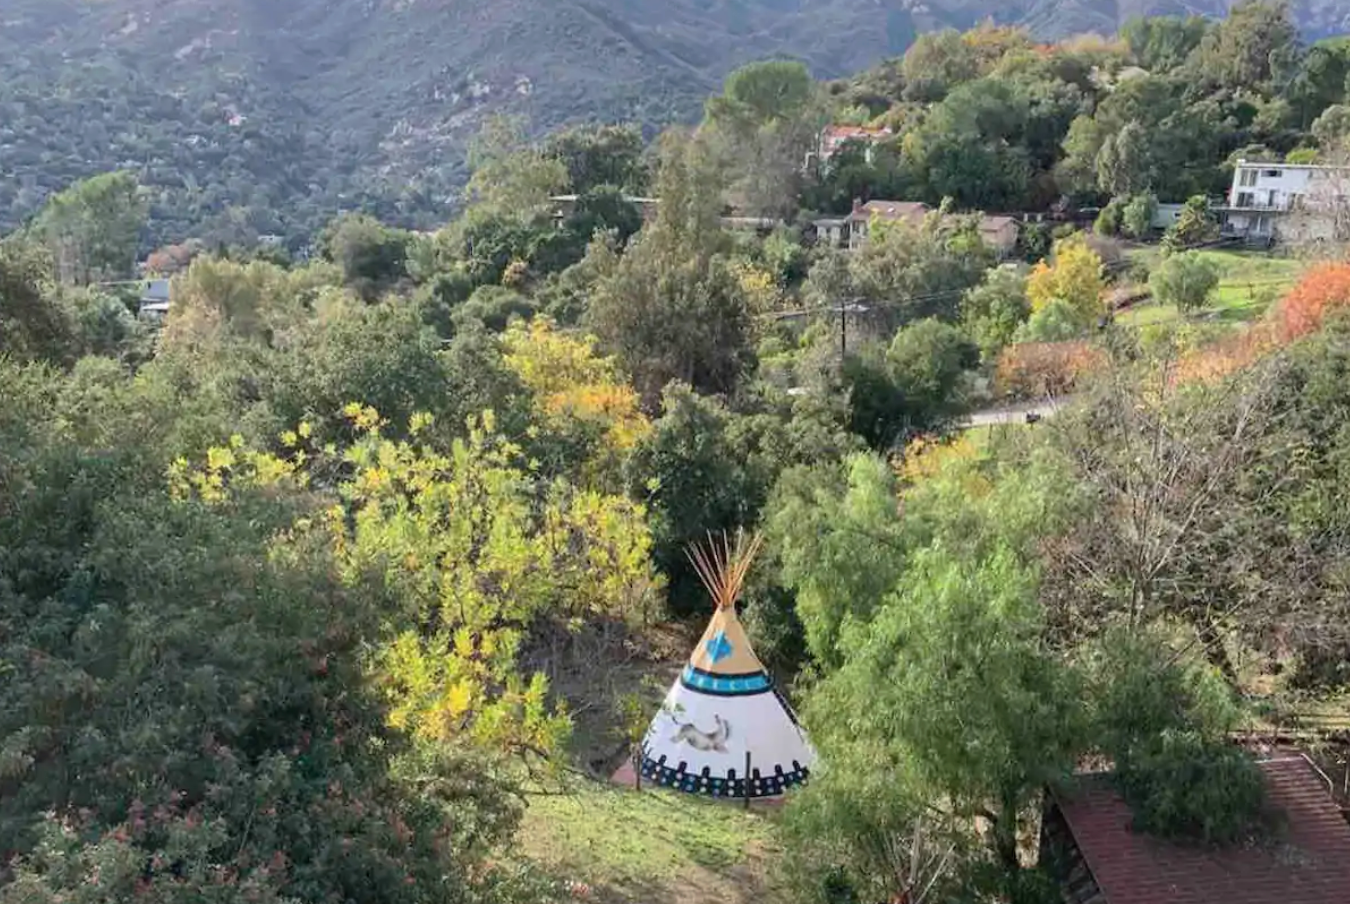 Unique Airbnbs near Los Angeles